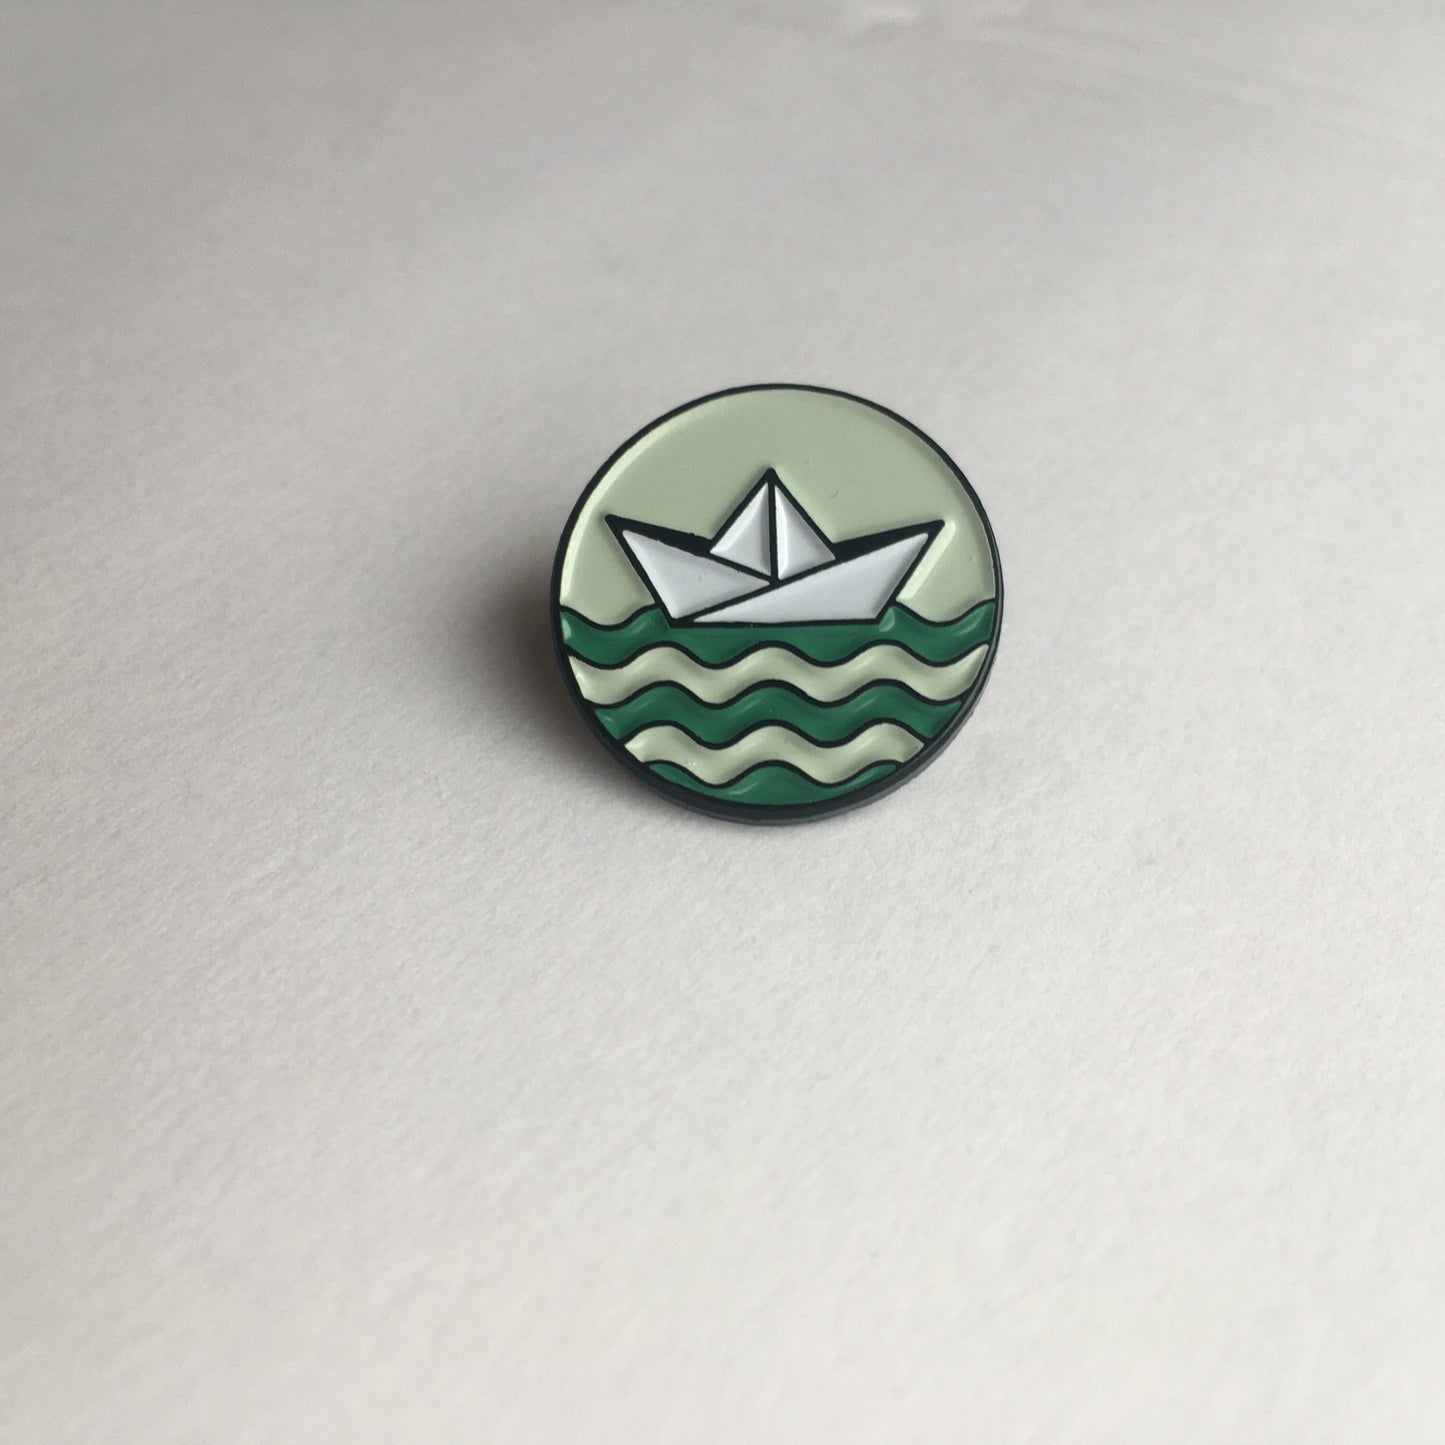 Lil Boat Paper Boat - Enamel Pin - Lil Boat Boutique logo pin